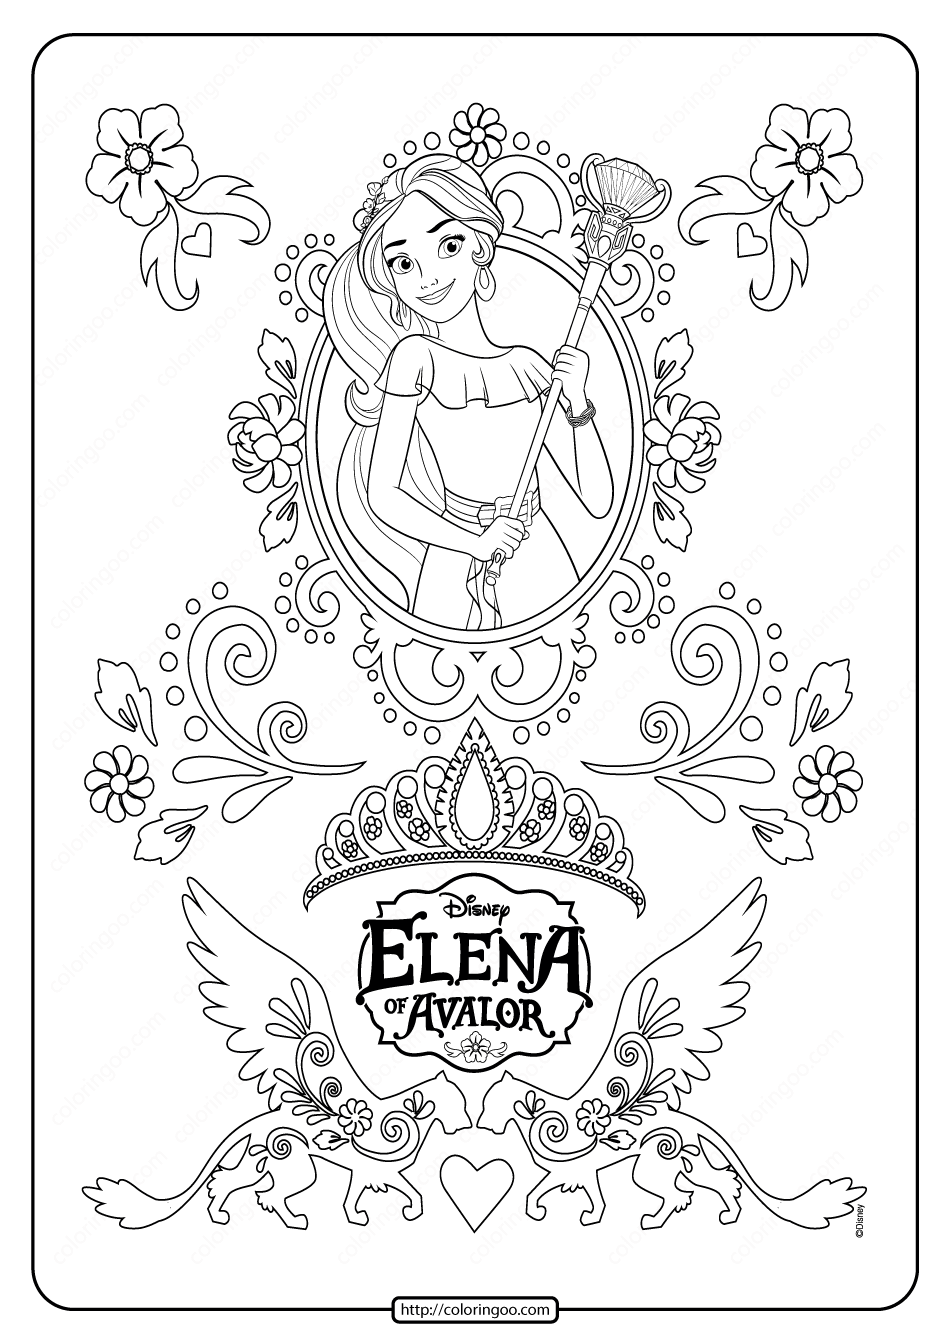 Disney Elena of Avalor Coloring Sheet